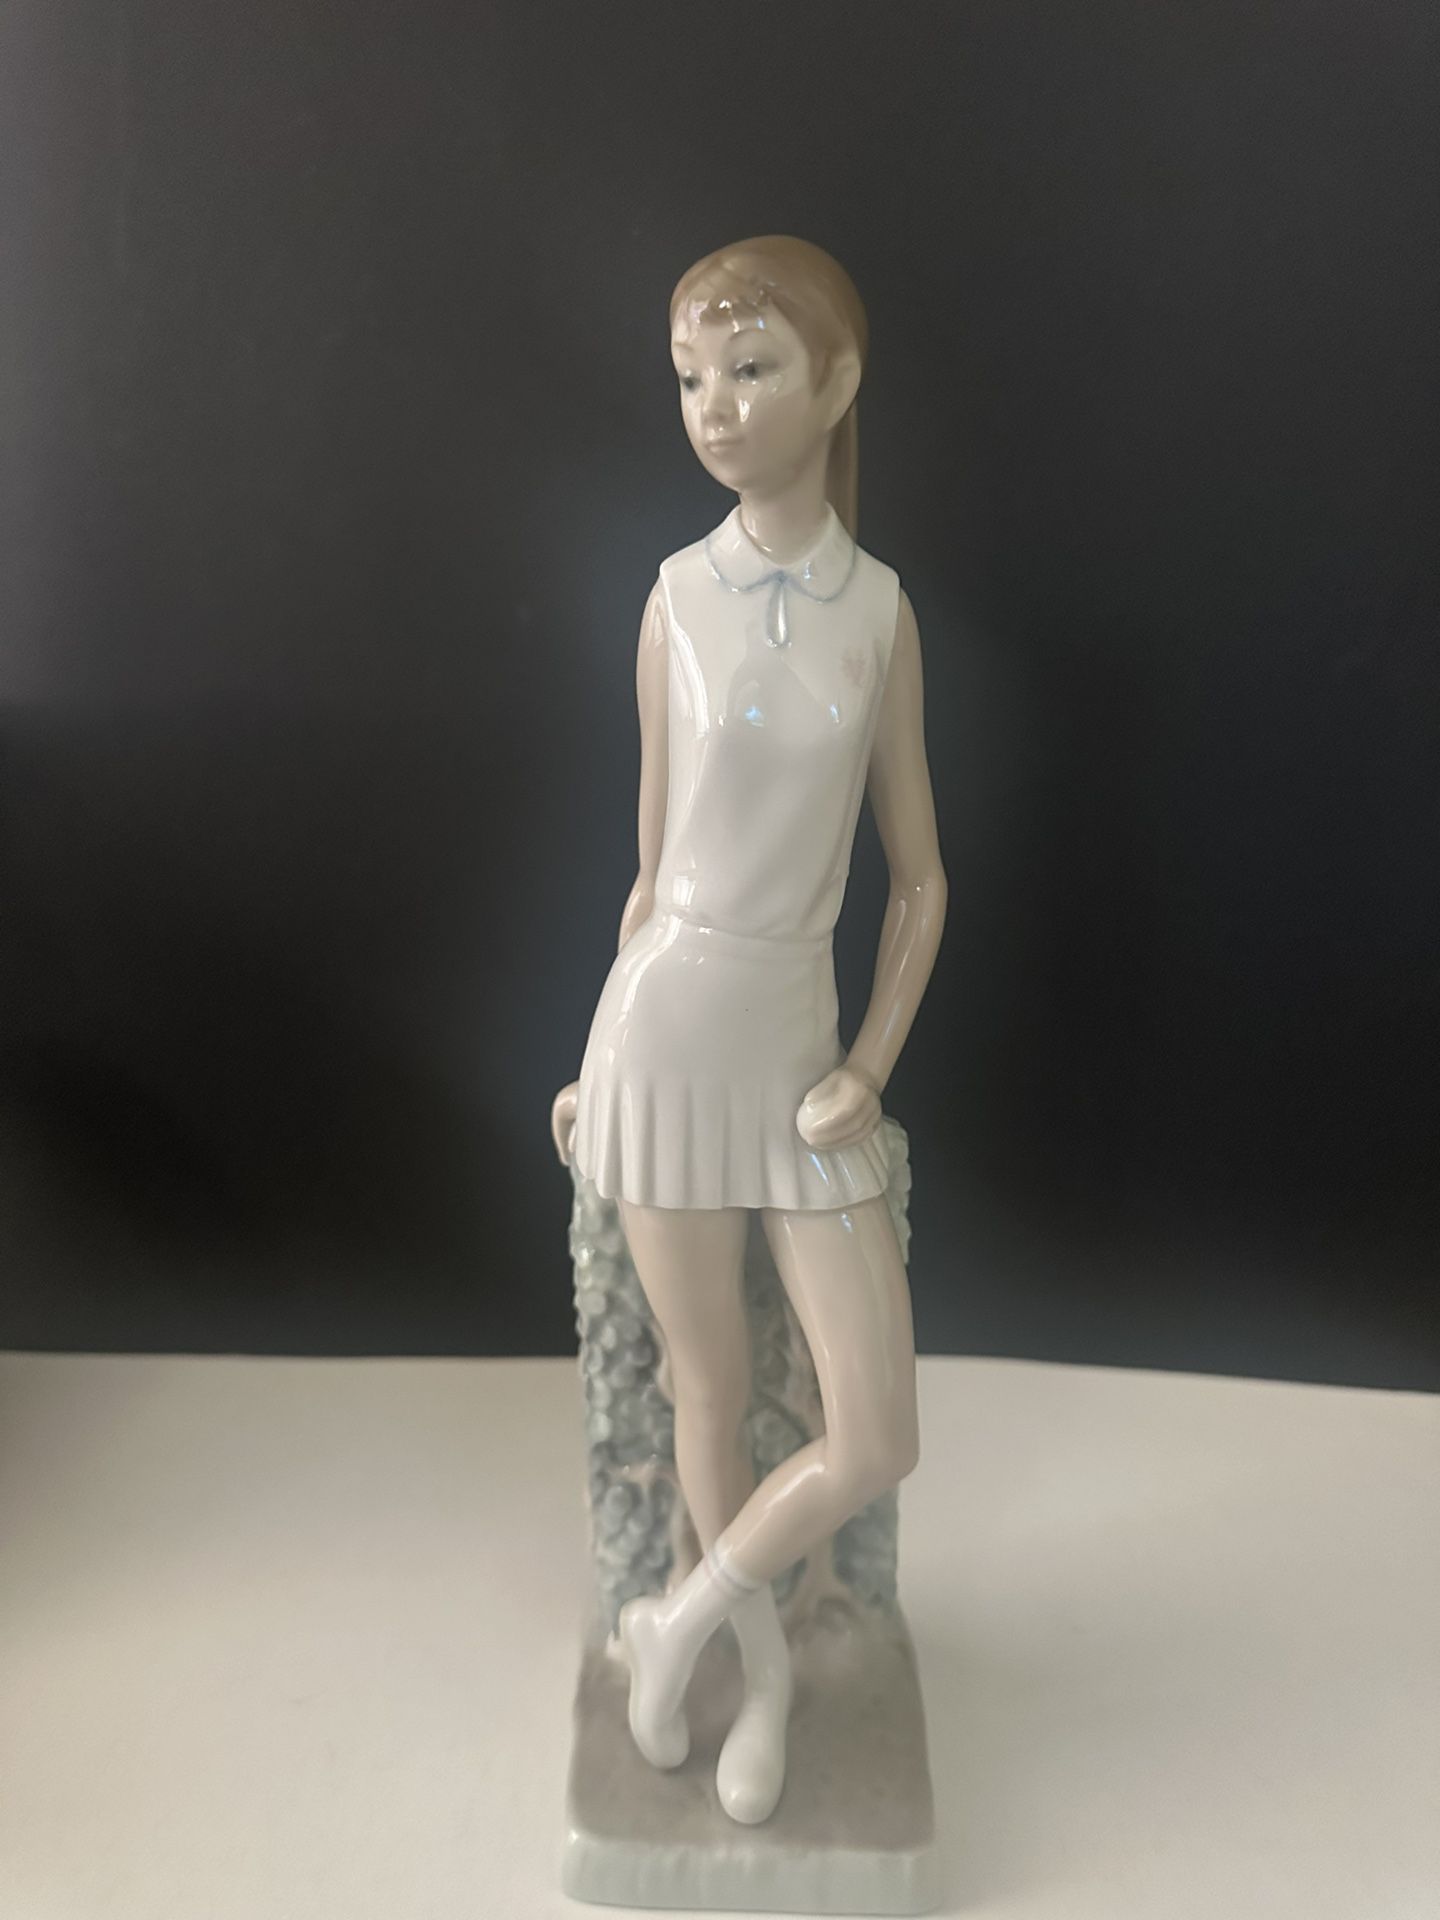 Lladro Tennis Girl Figurine